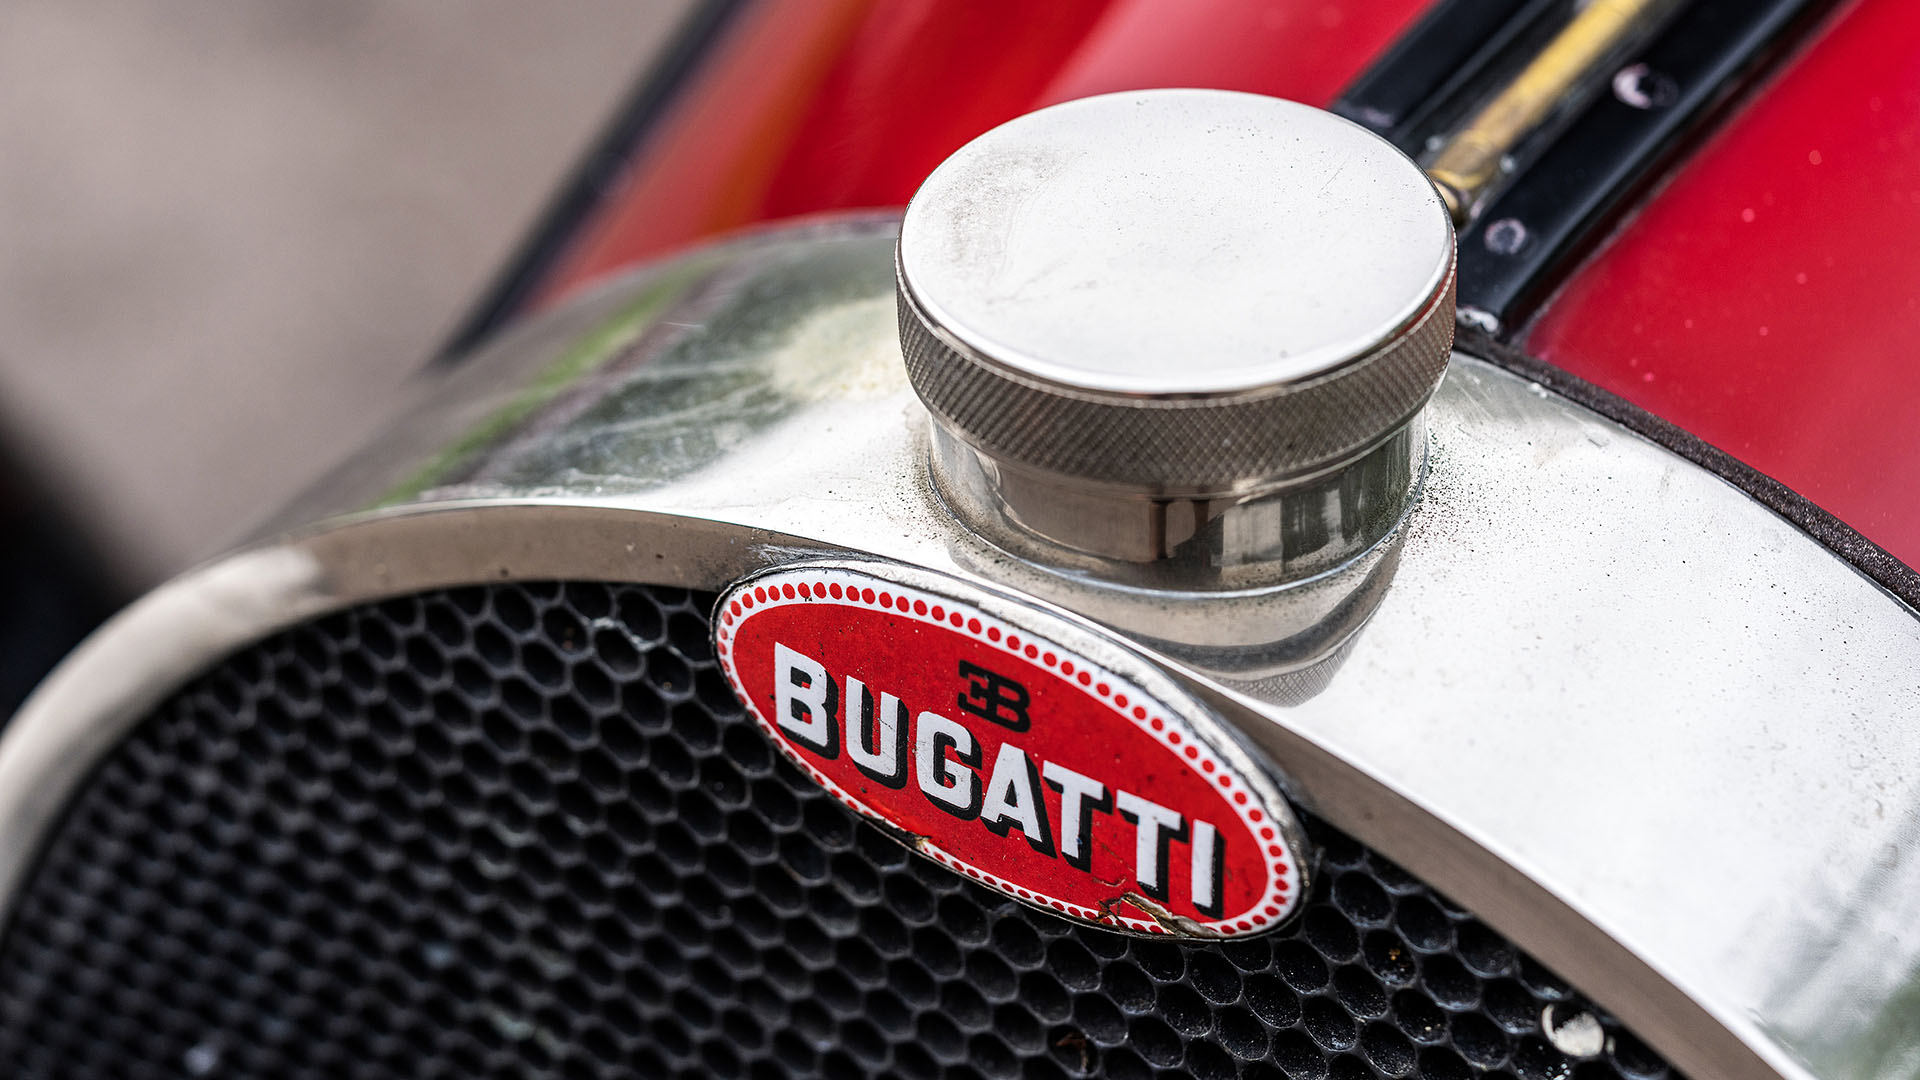 Home Spiritual The of in England Bugatti